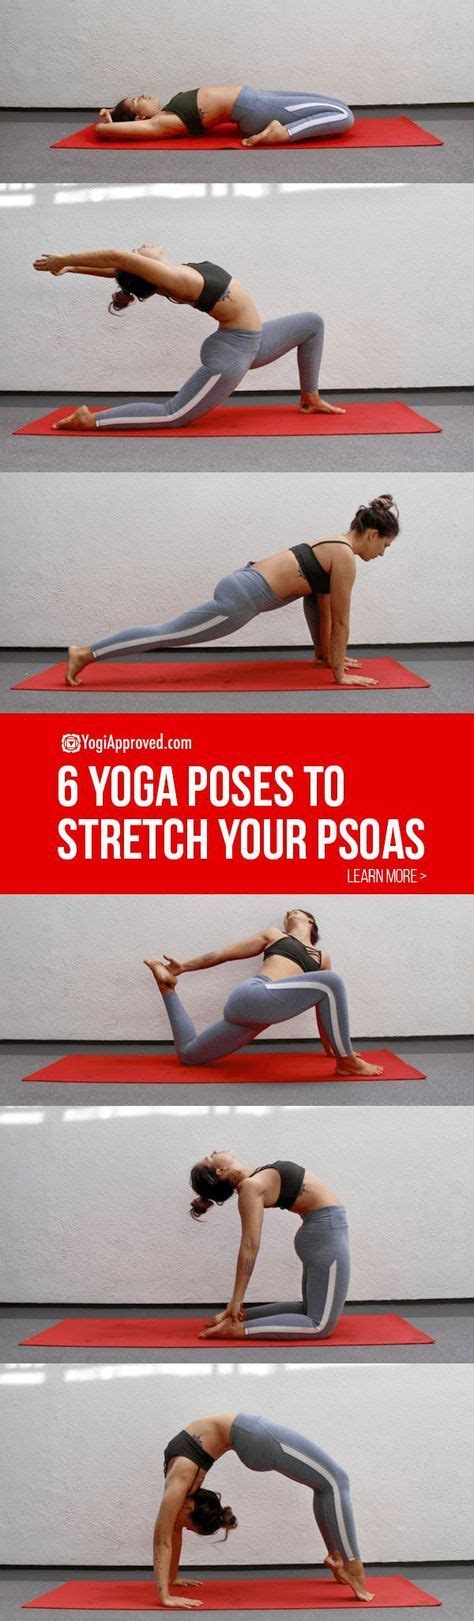 psoas defined explained  explored   yoga poses yoga